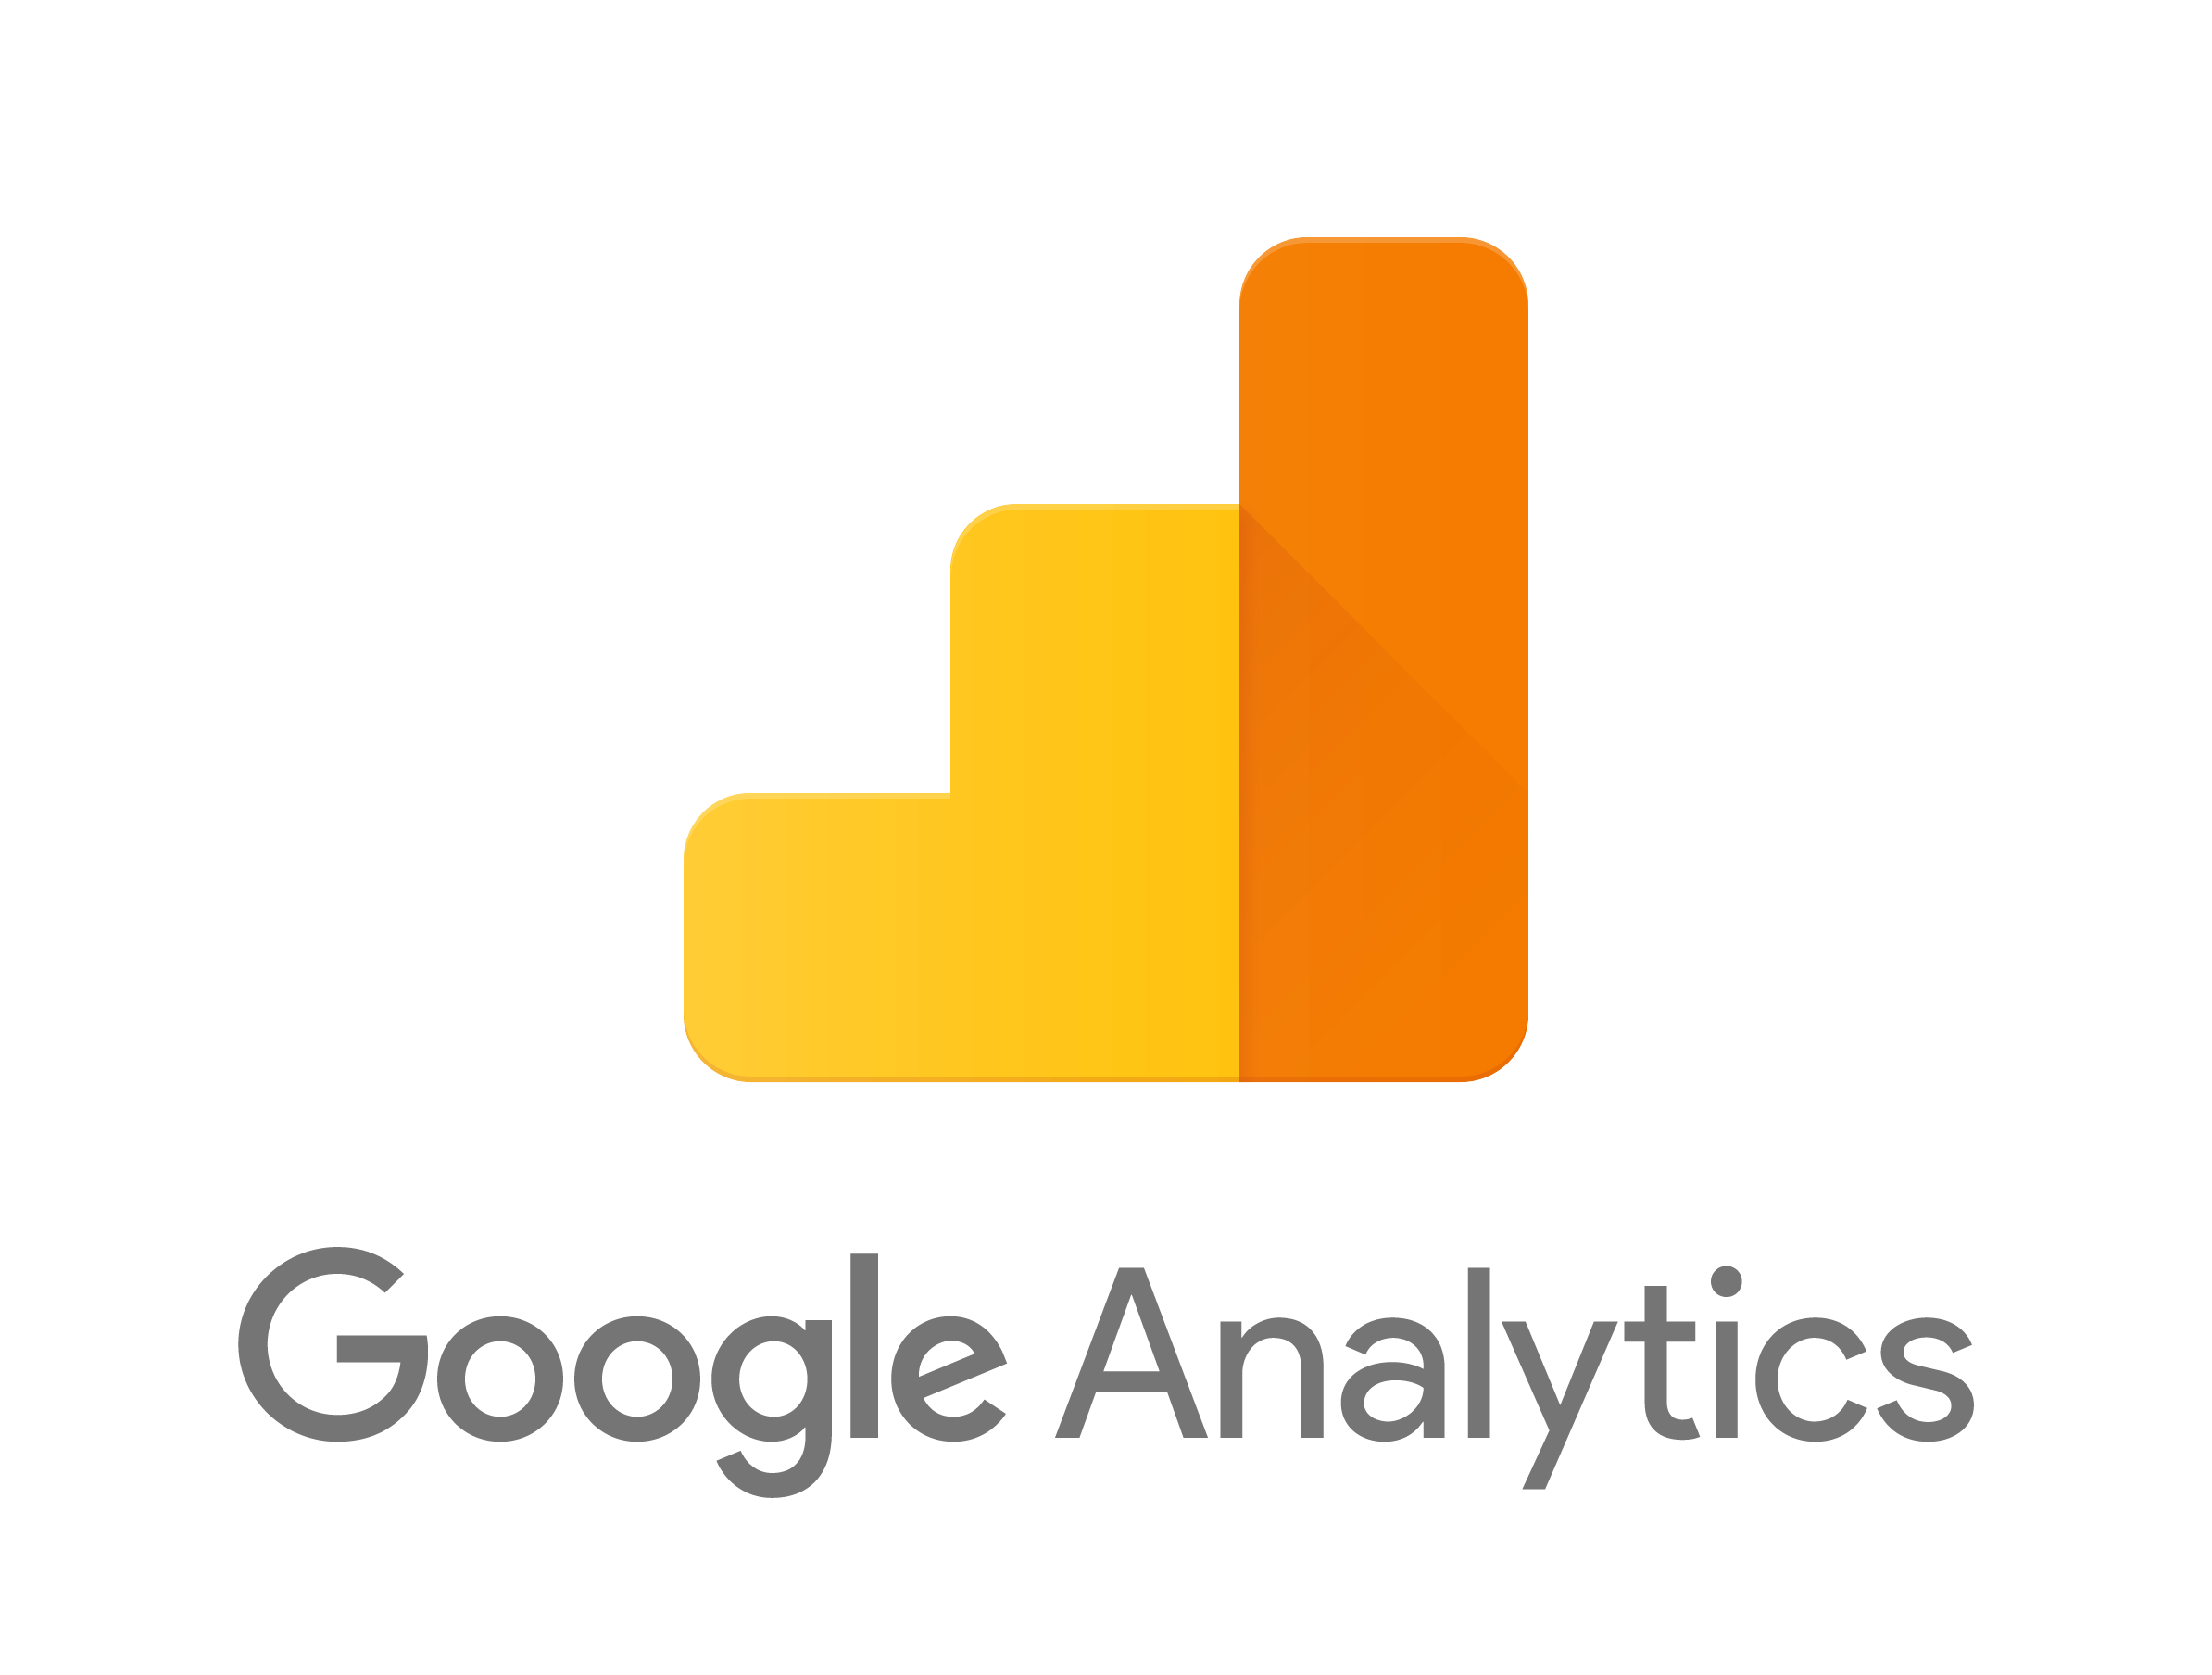 Can I Use Logo - Google Analytics Developer Branding Guidelines & Policies | Google ...